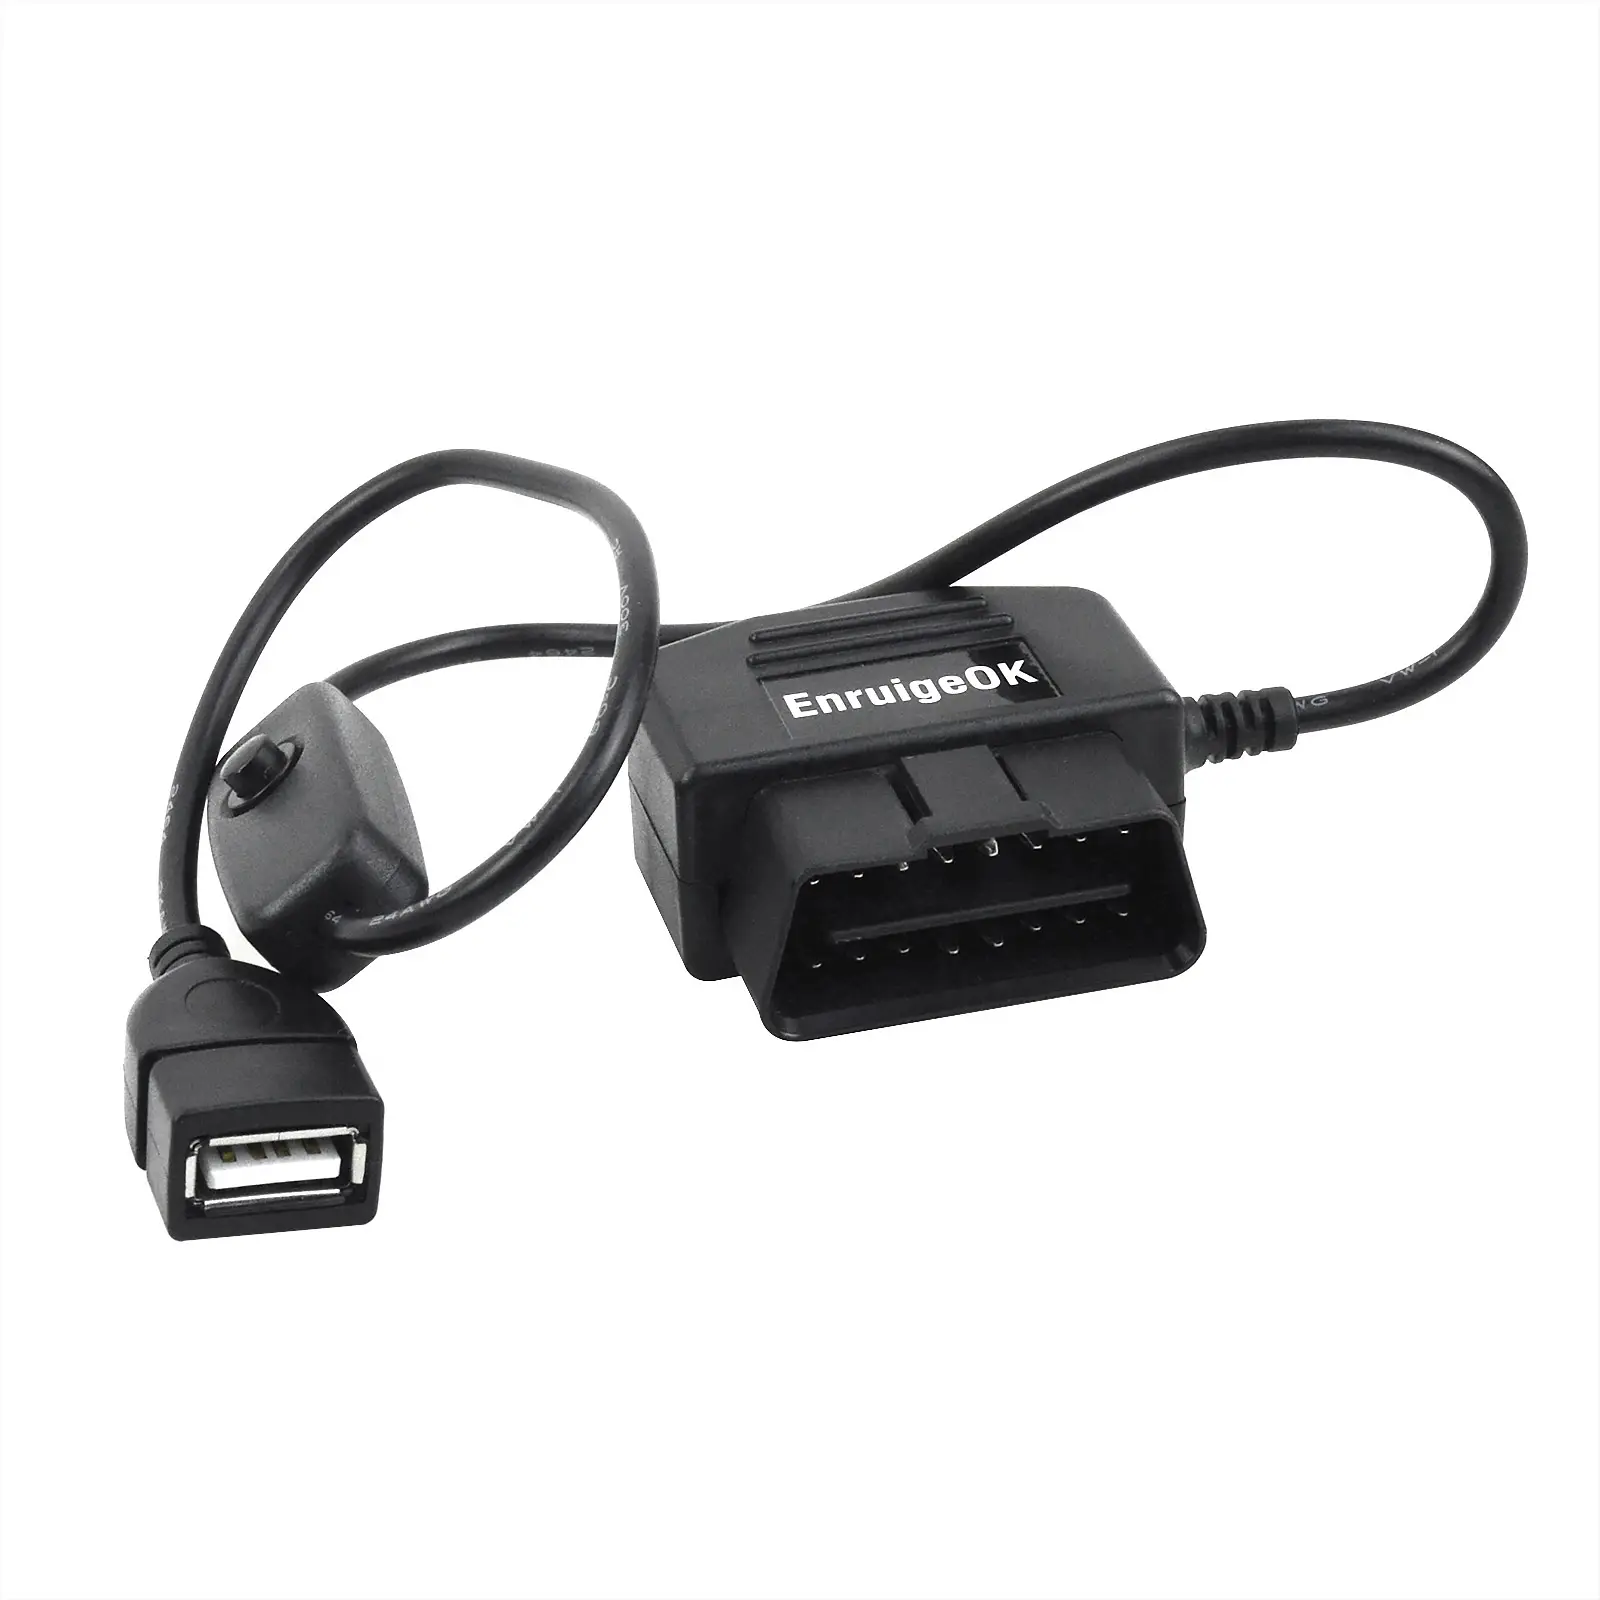 OBD2 to USB 암 포트 전원 어댑터 OBDII 충전 케이블 자동차 대시 캠 GPS 캠코더 차량 DVR 전화 용 스위치 버튼